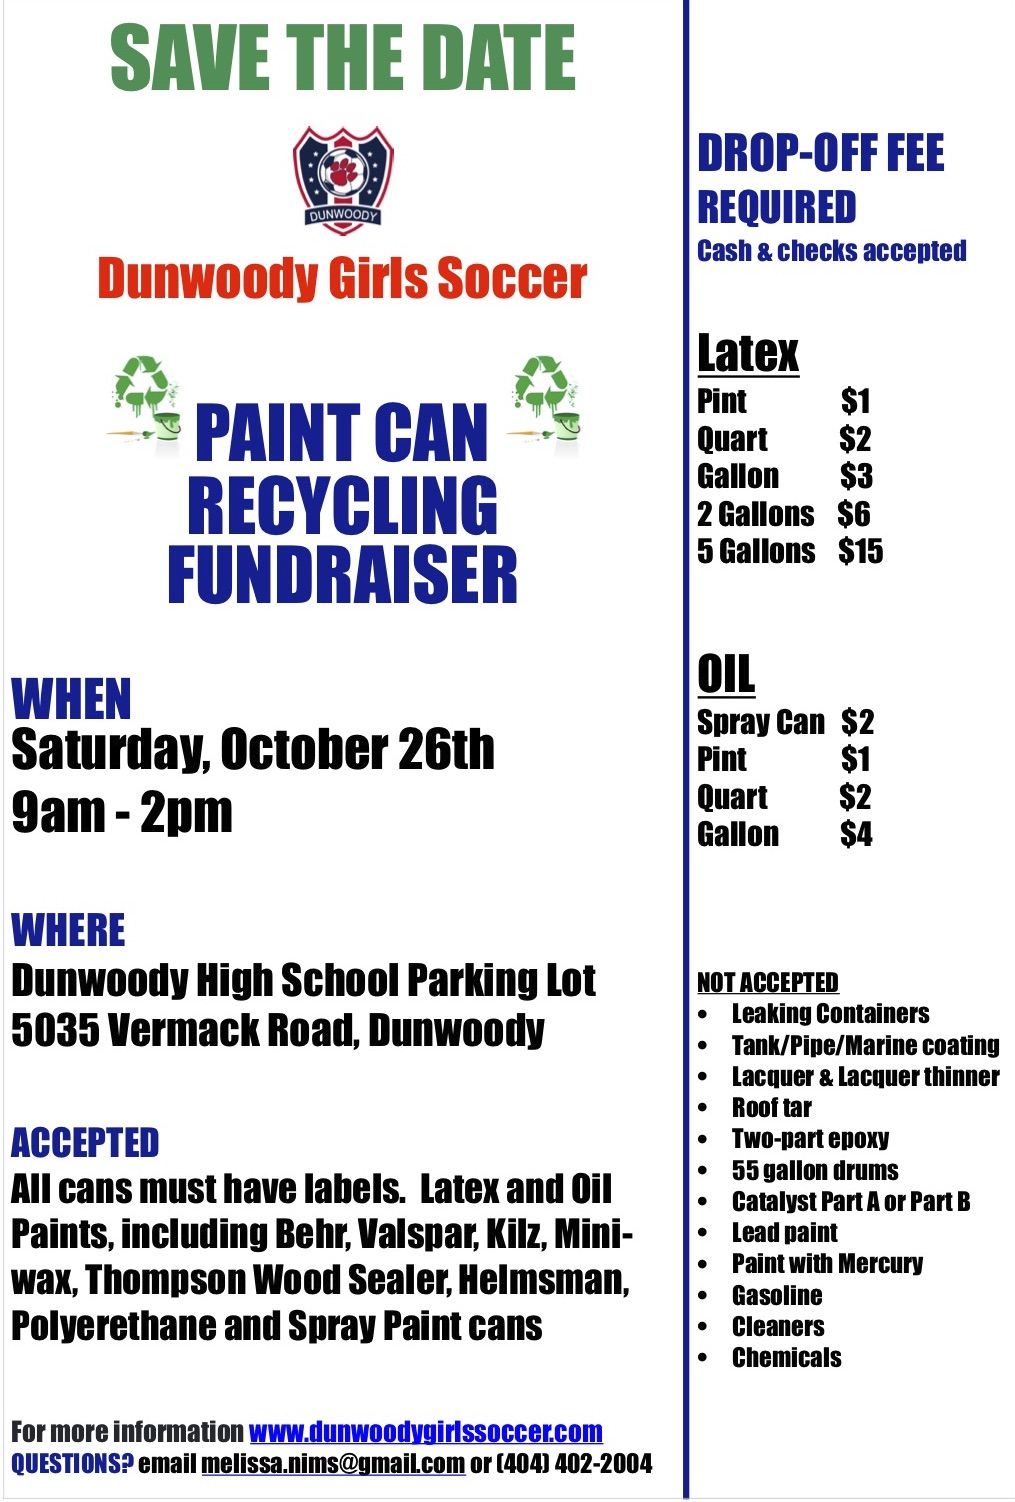 Dunwoody Girls Soccer Paint Recycling Fundraiser